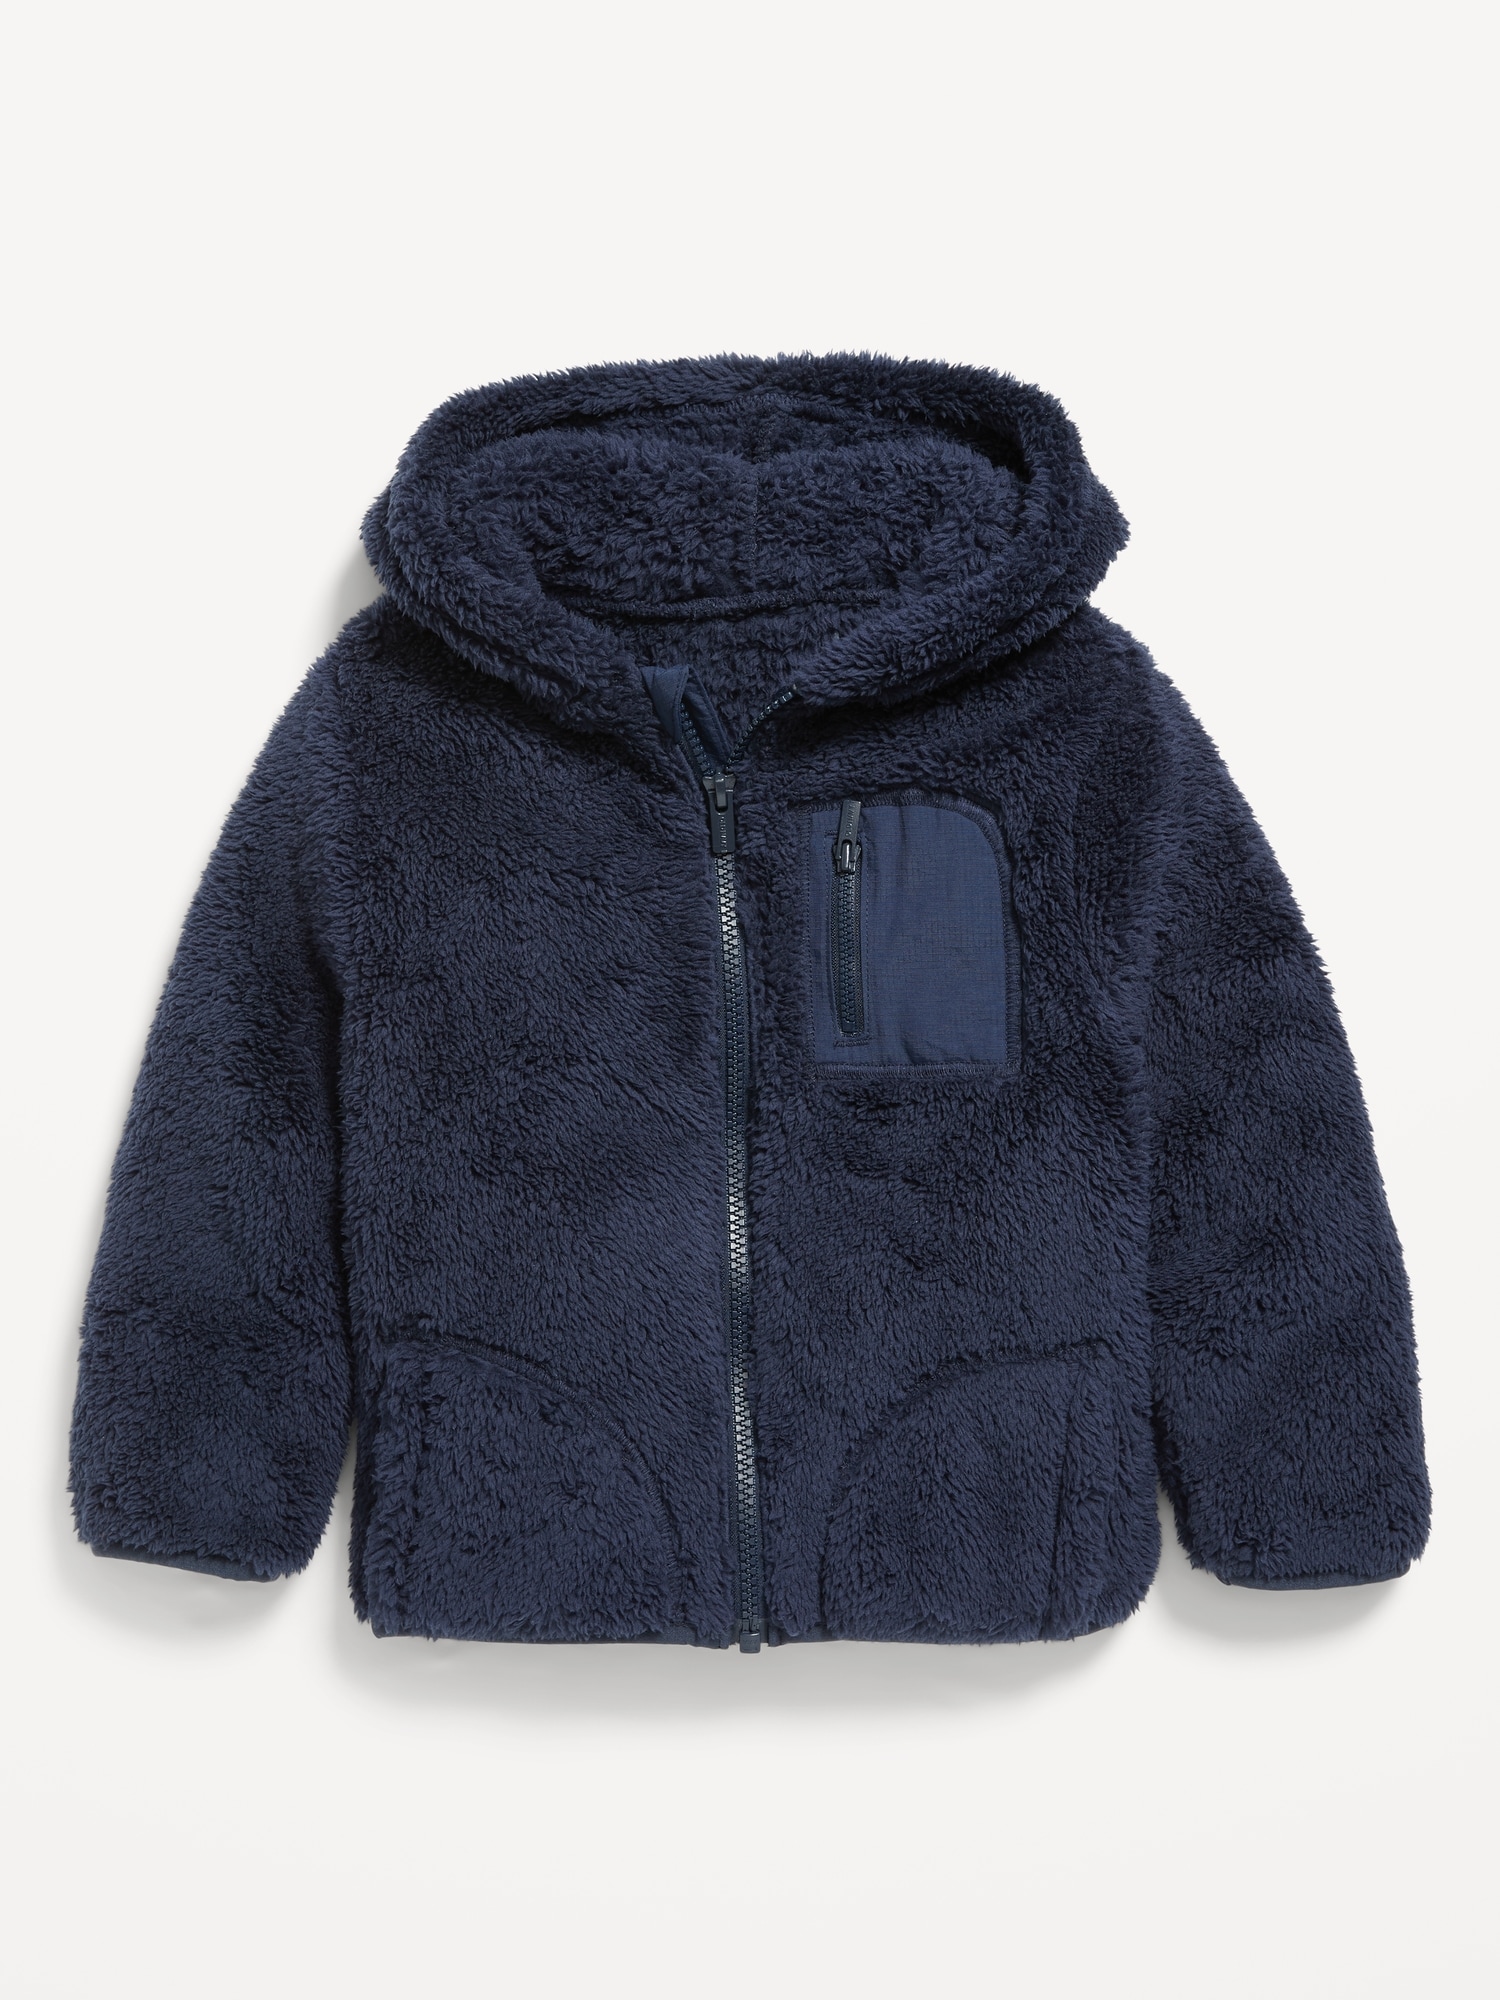 Unisex Sherpa Zip-Front Pocket Hooded Jacket for Toddler | Old Navy